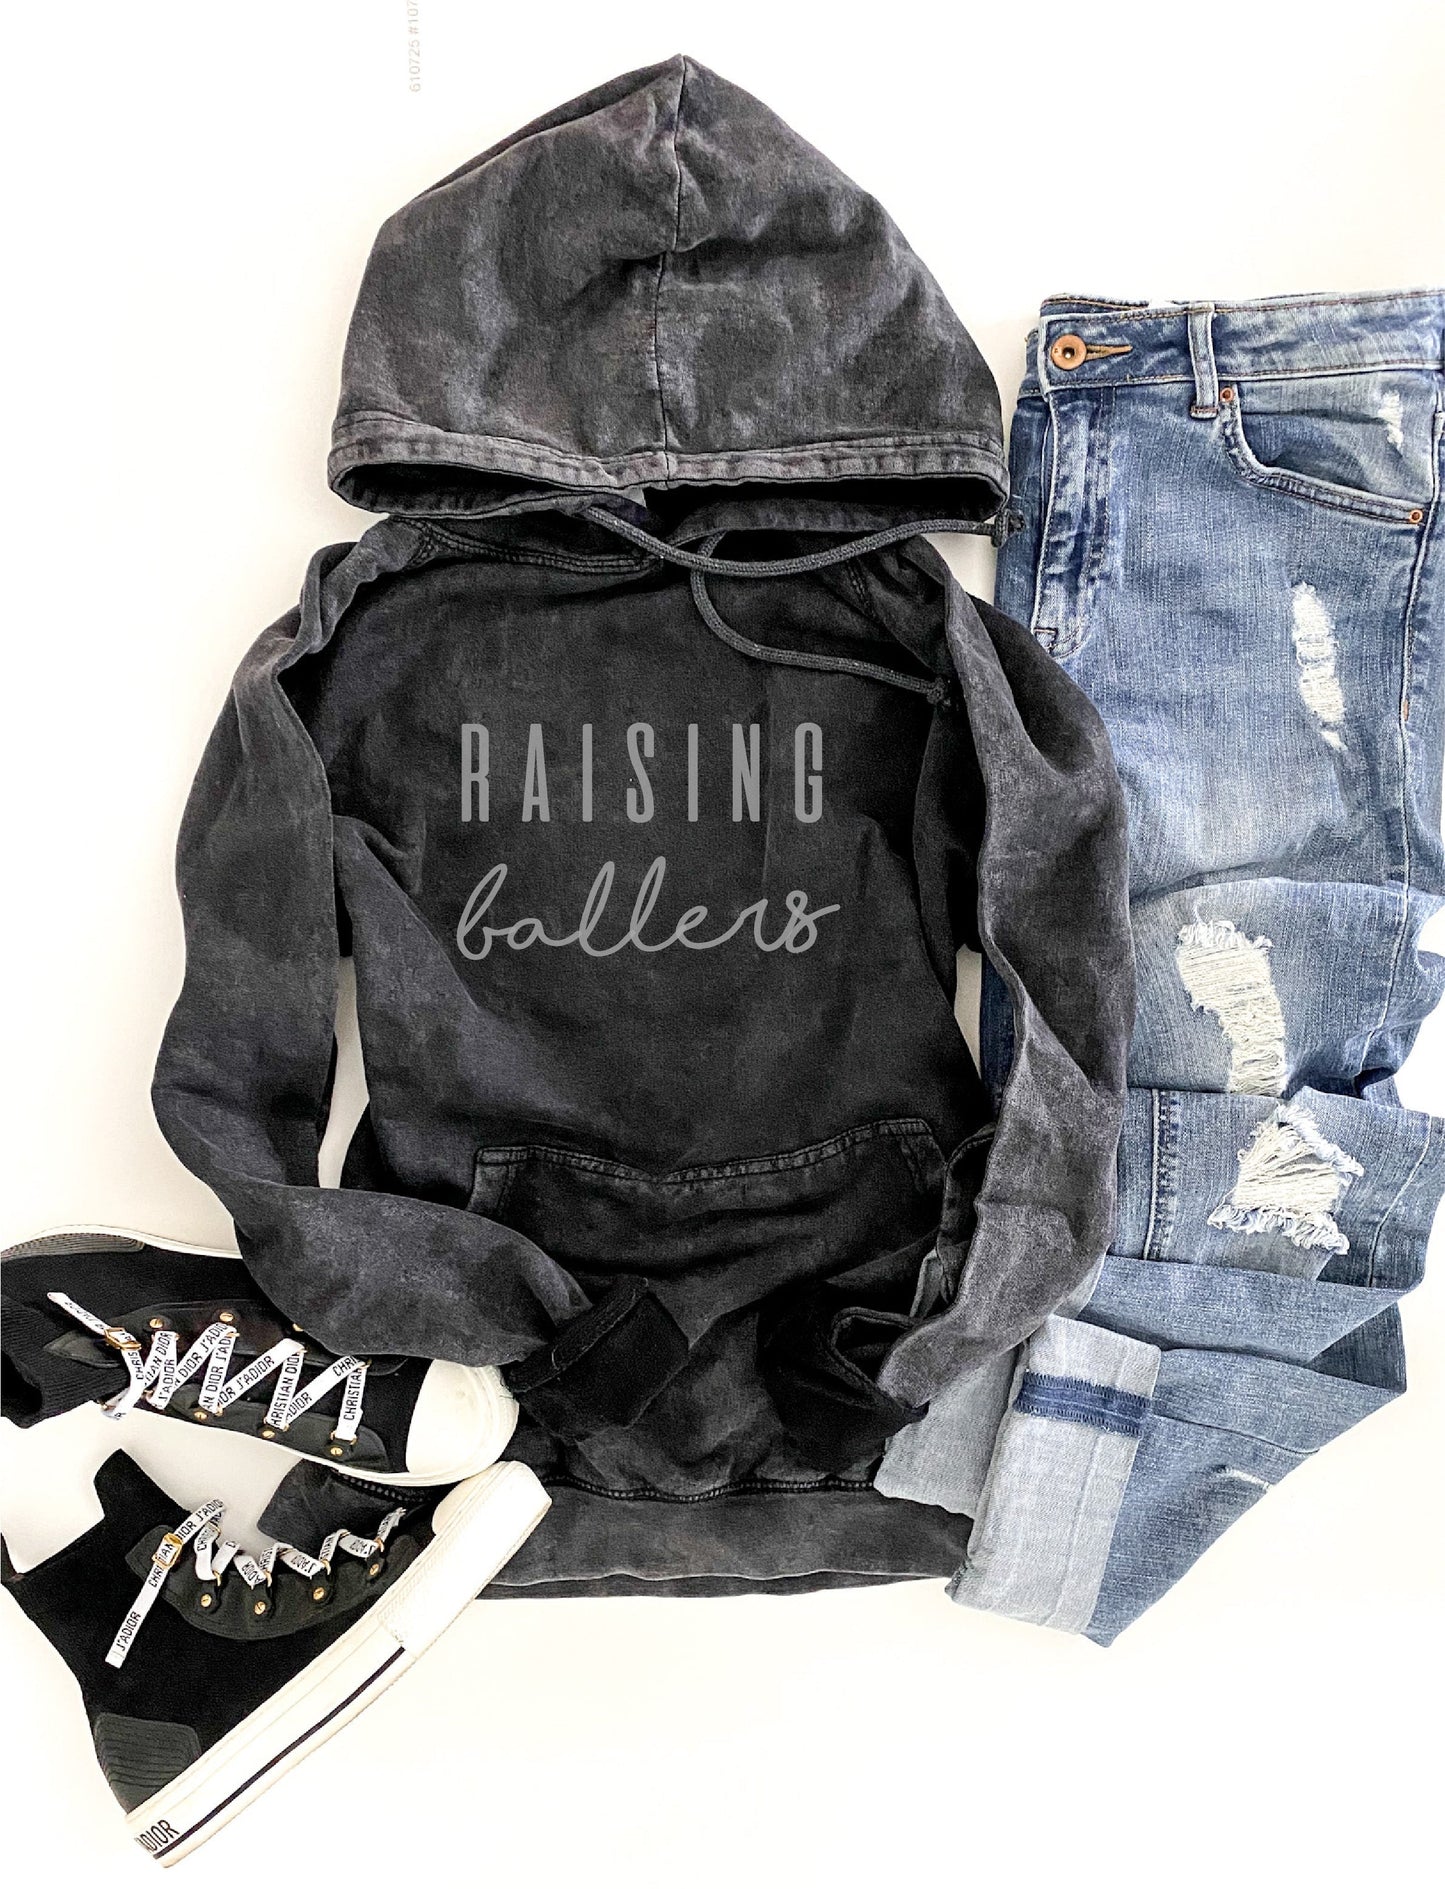 Raising Ballers Black Vintage Wash Hoodie Sweatshirt [will ship separately]